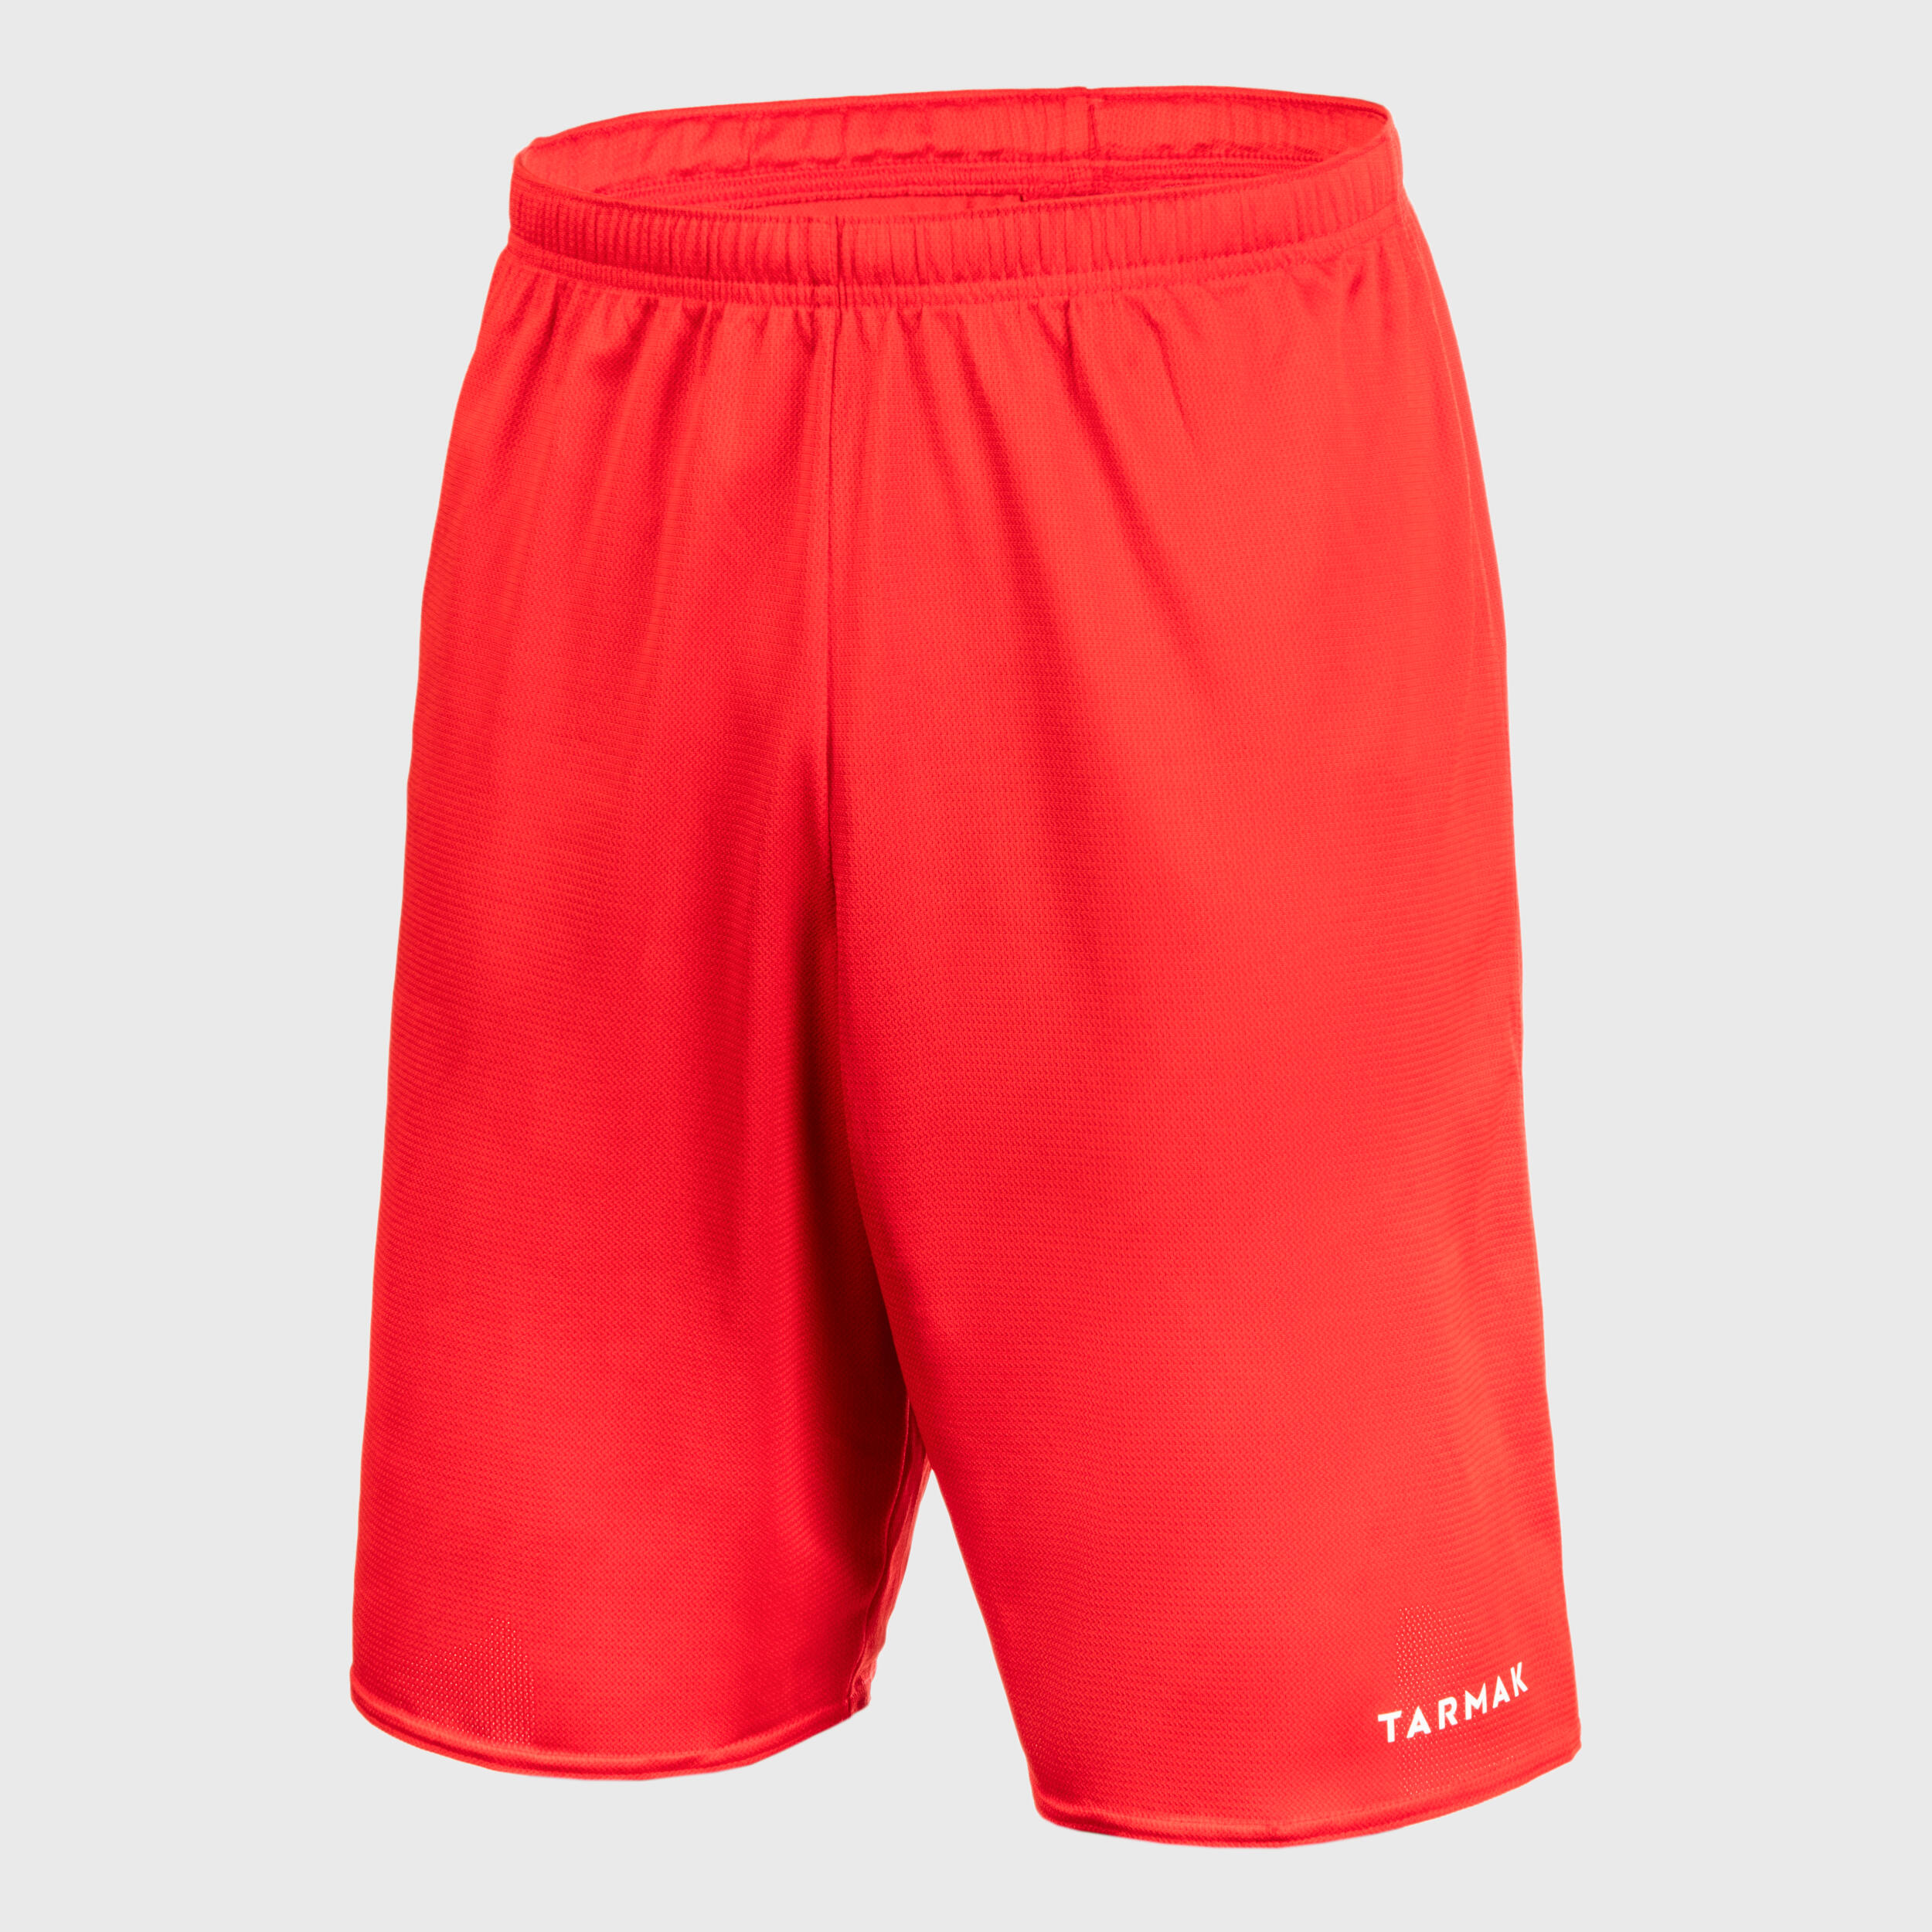 Adult Basketball Shorts SH100 - Red 4/6